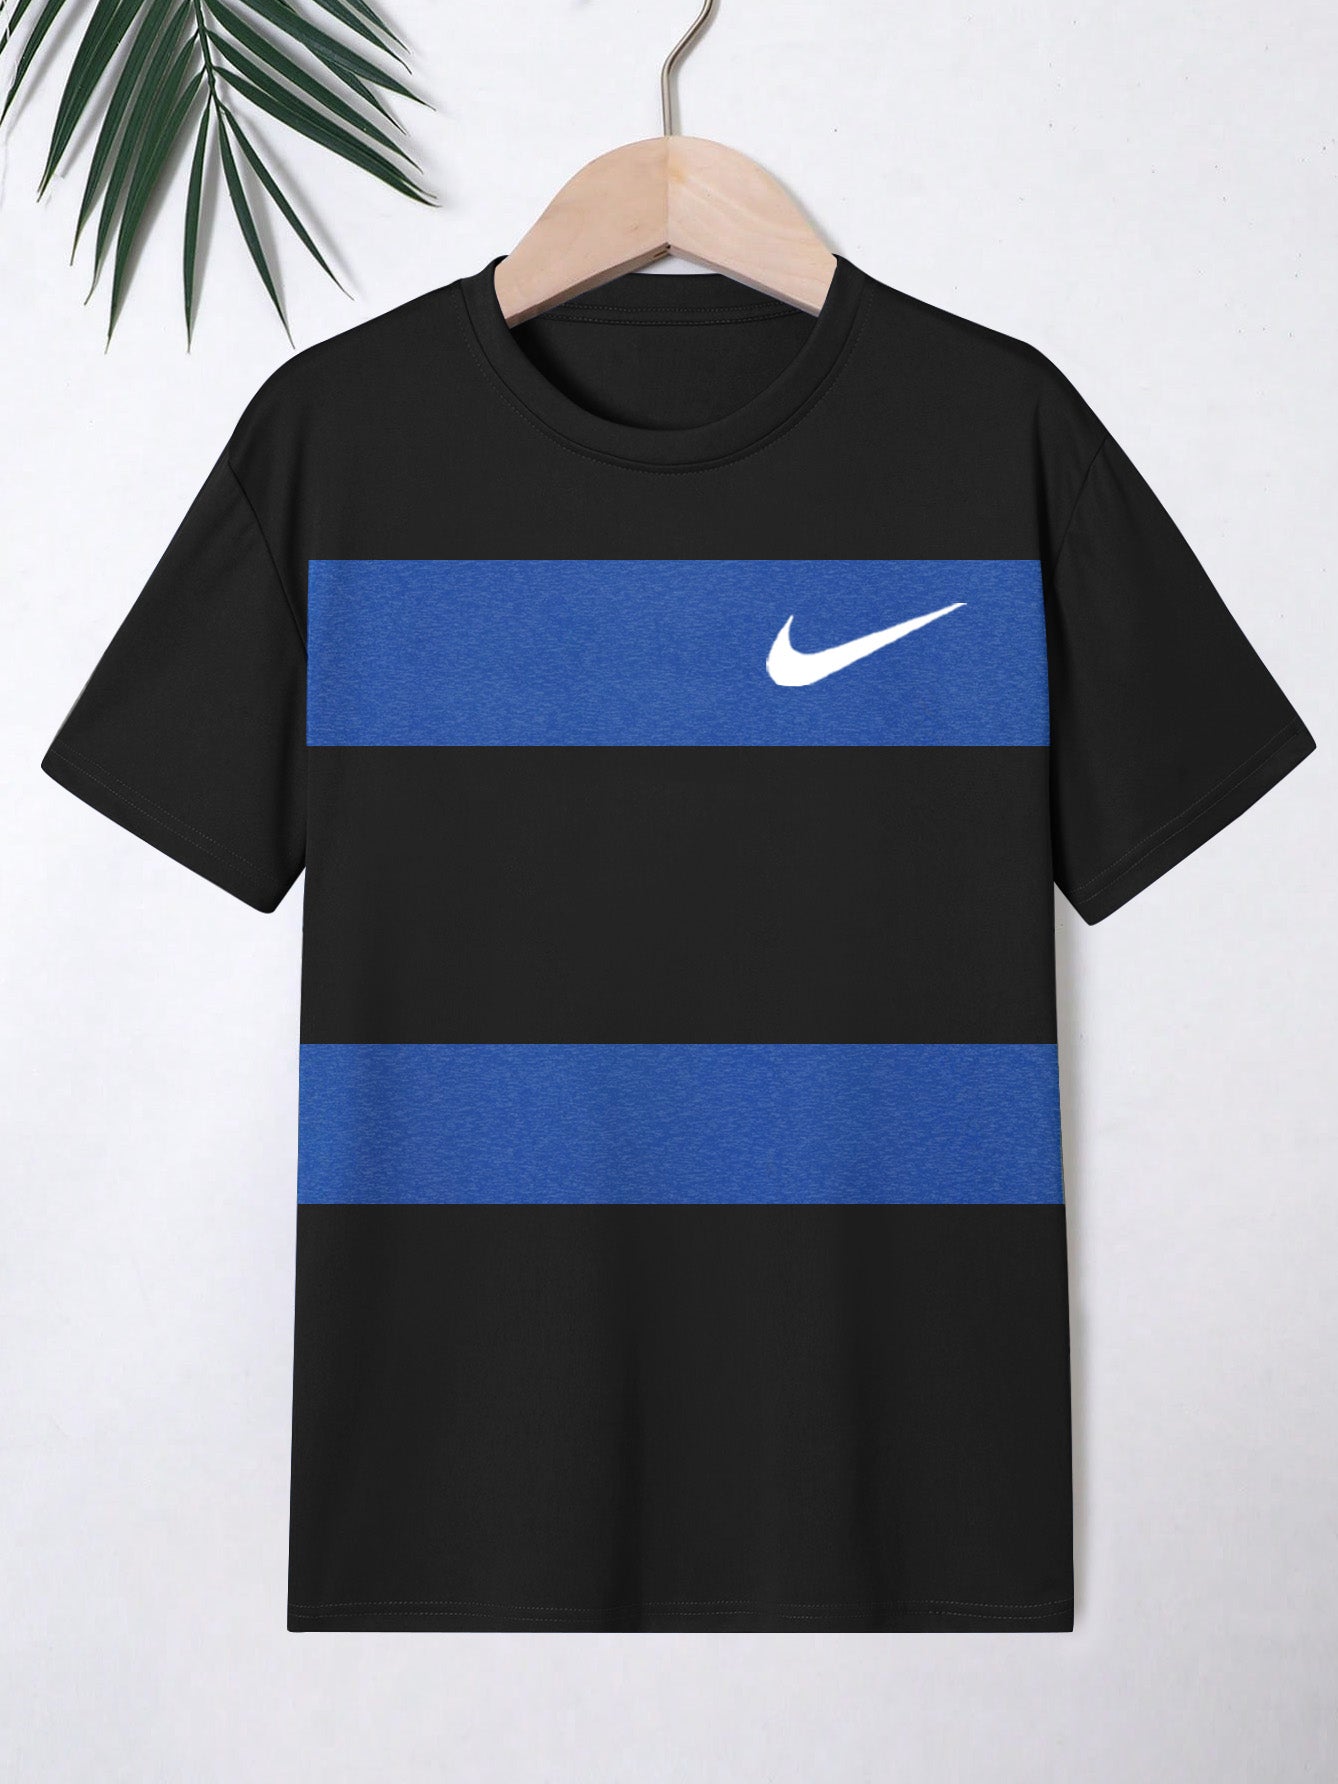 NK Crew Neck Single Jersey Tee Shirt For Kids-Black with Blue Melange Panels-SP2267